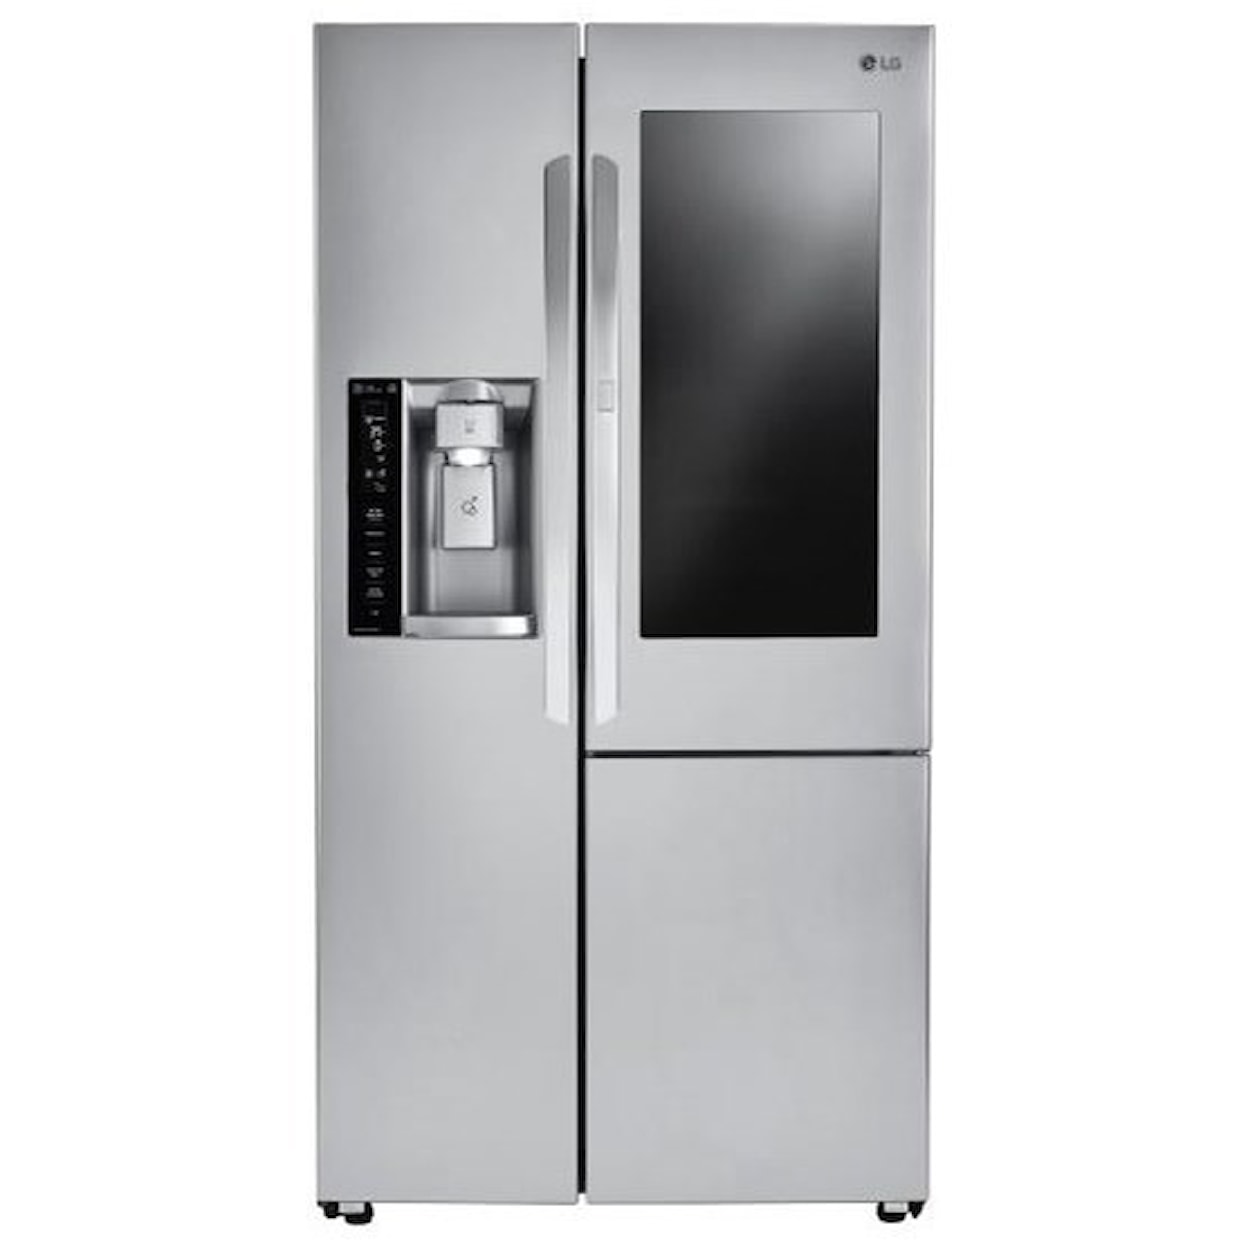 LG Appliances Side by Side Refrigerators 22 Cu.Ft. Counter-Depth Refrigerator